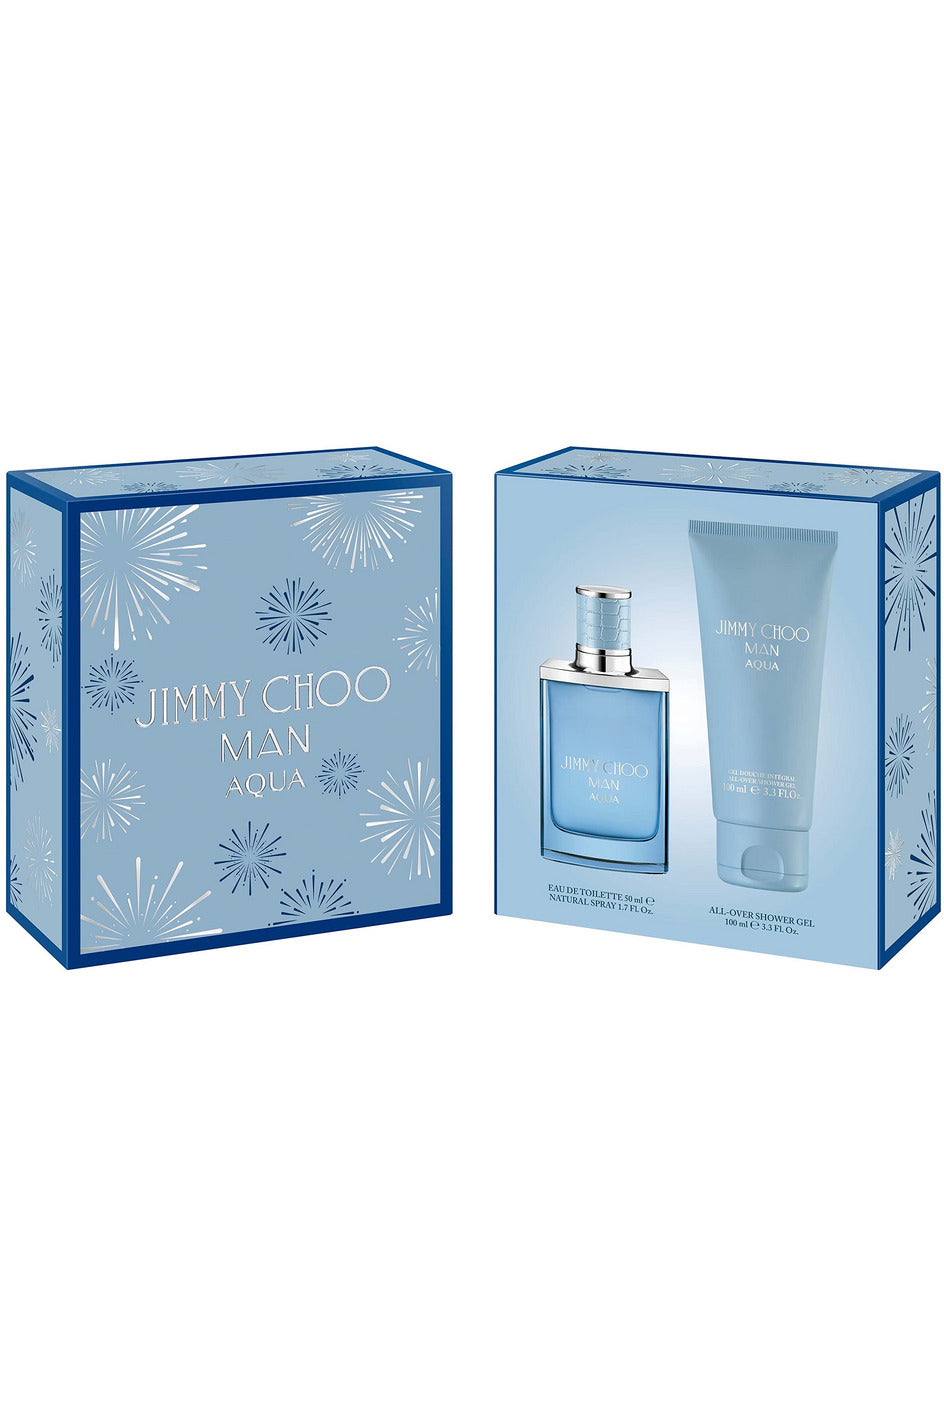 Buy Jimmy Choo Men Aqua 3PCS Gift Set in Pakistan